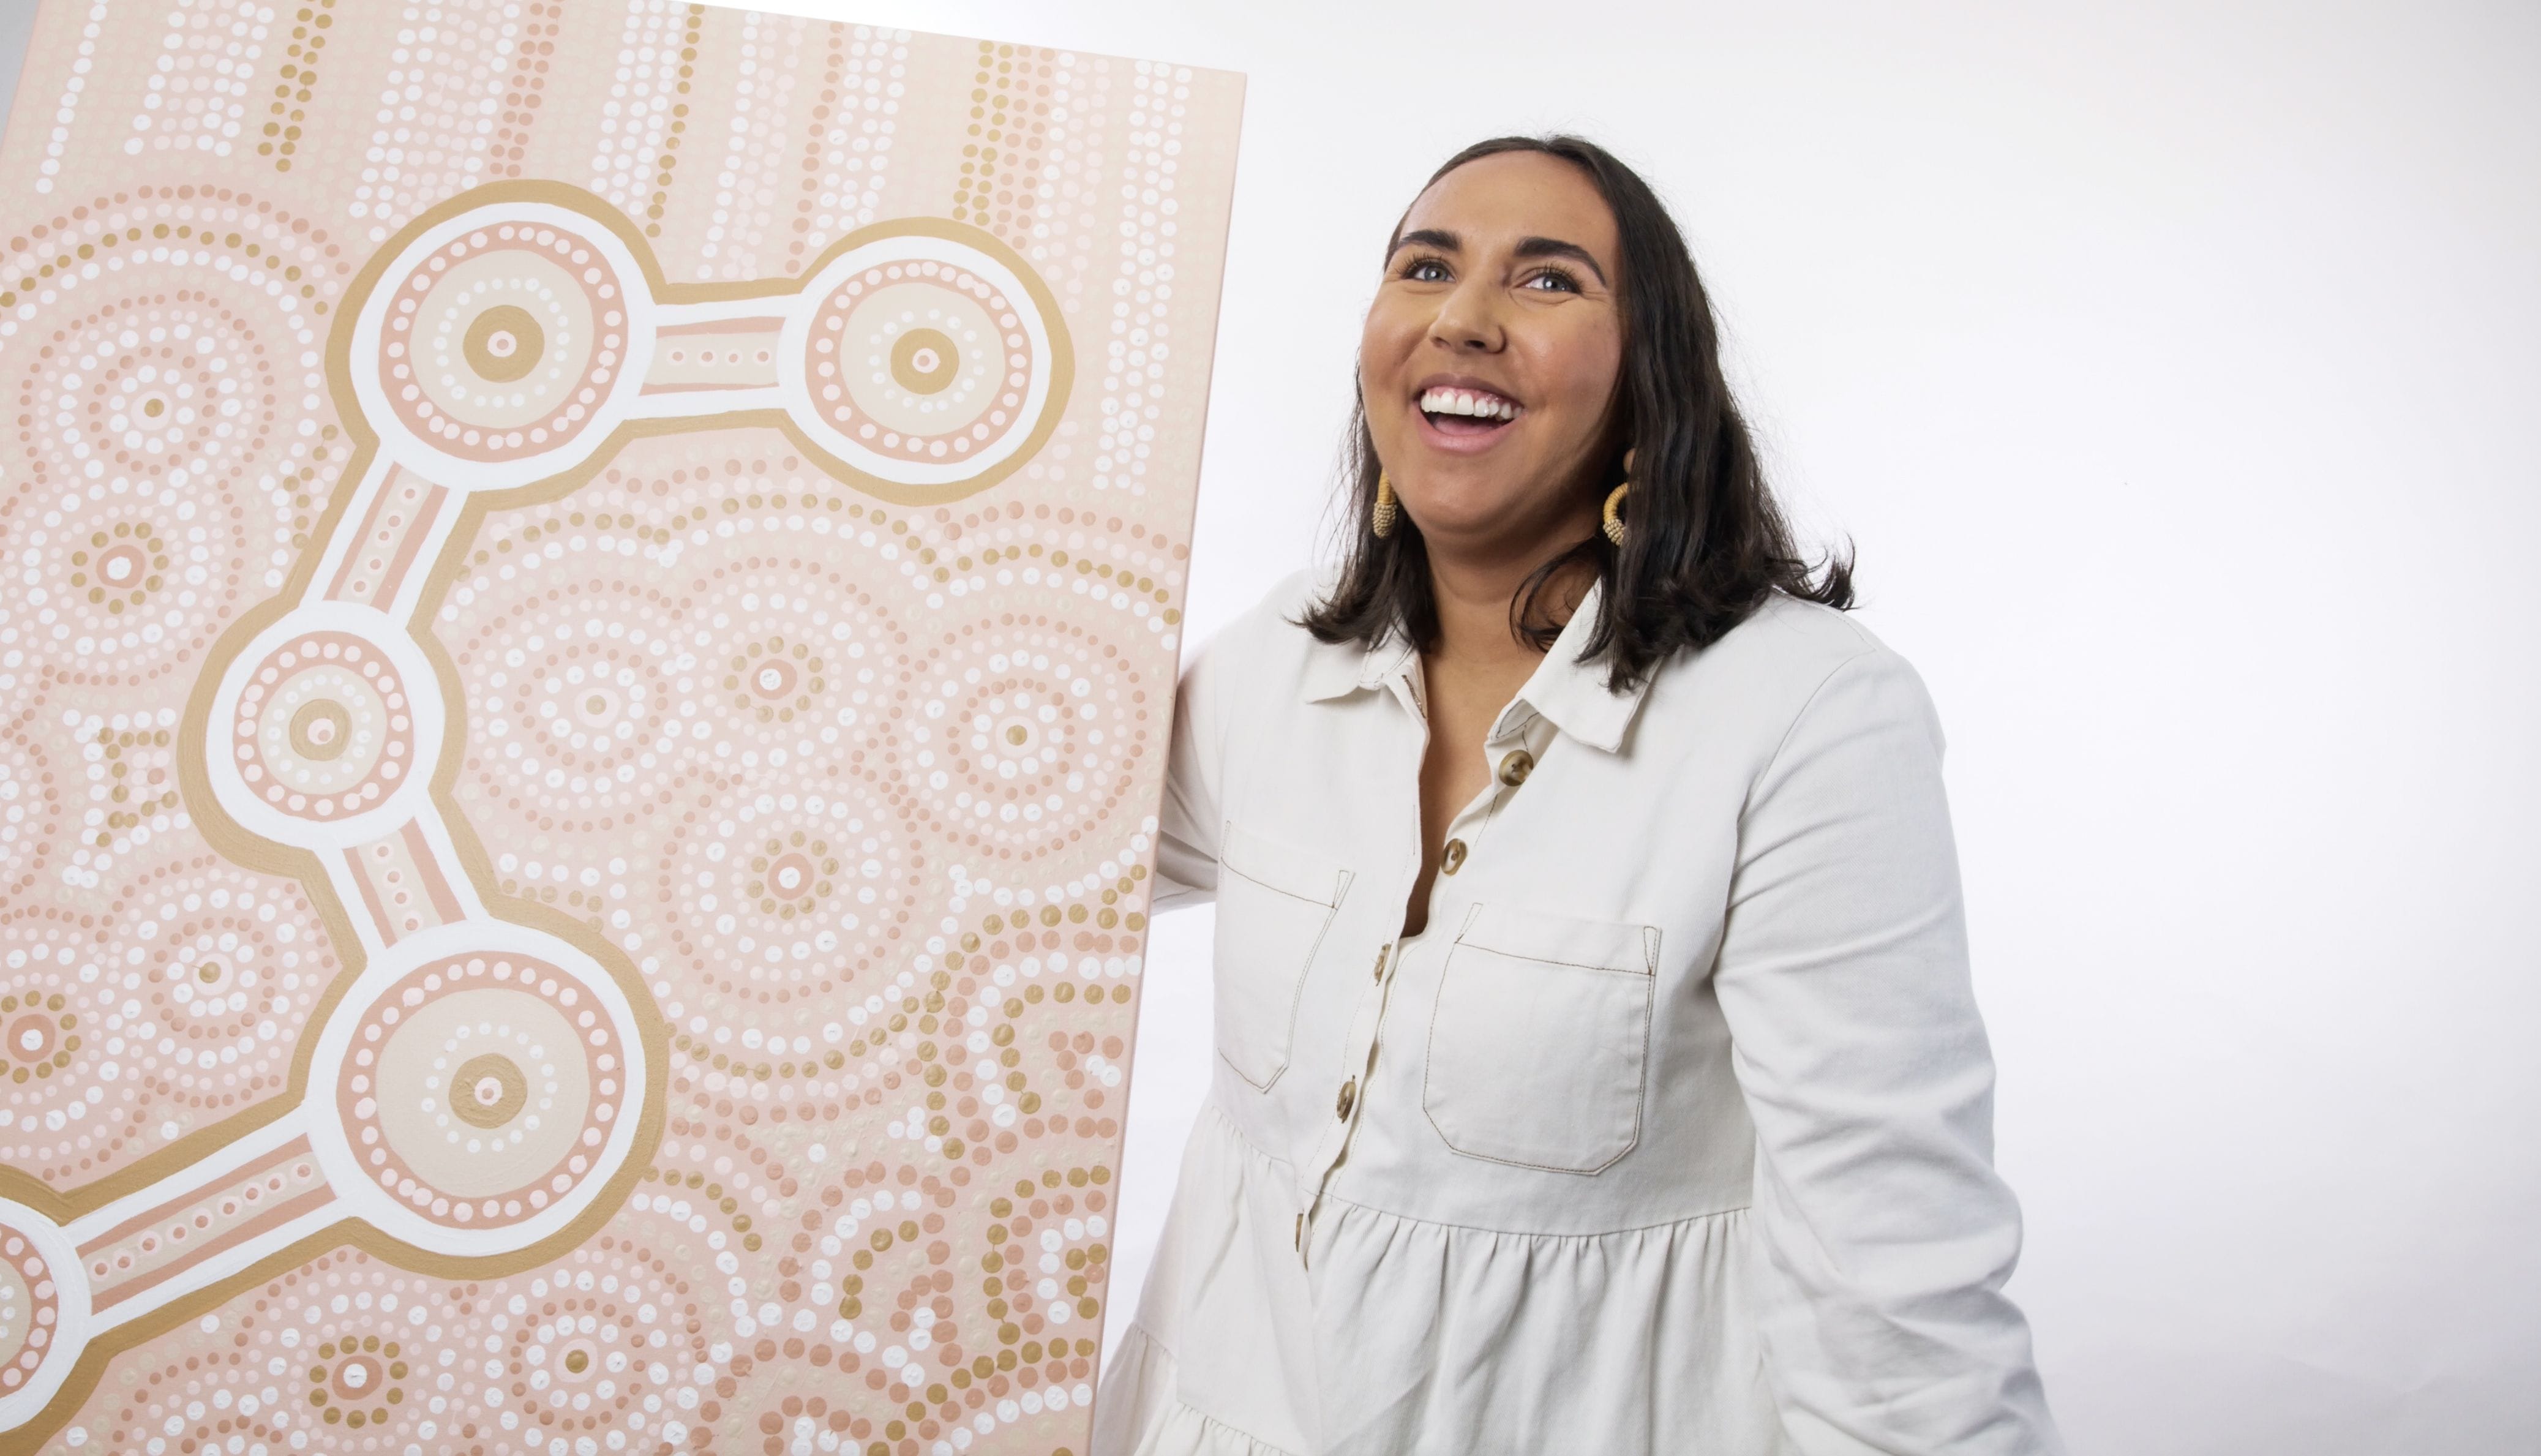 Gold Coast artist and proud Wiradjuri woman Katrina Graves poses with her art